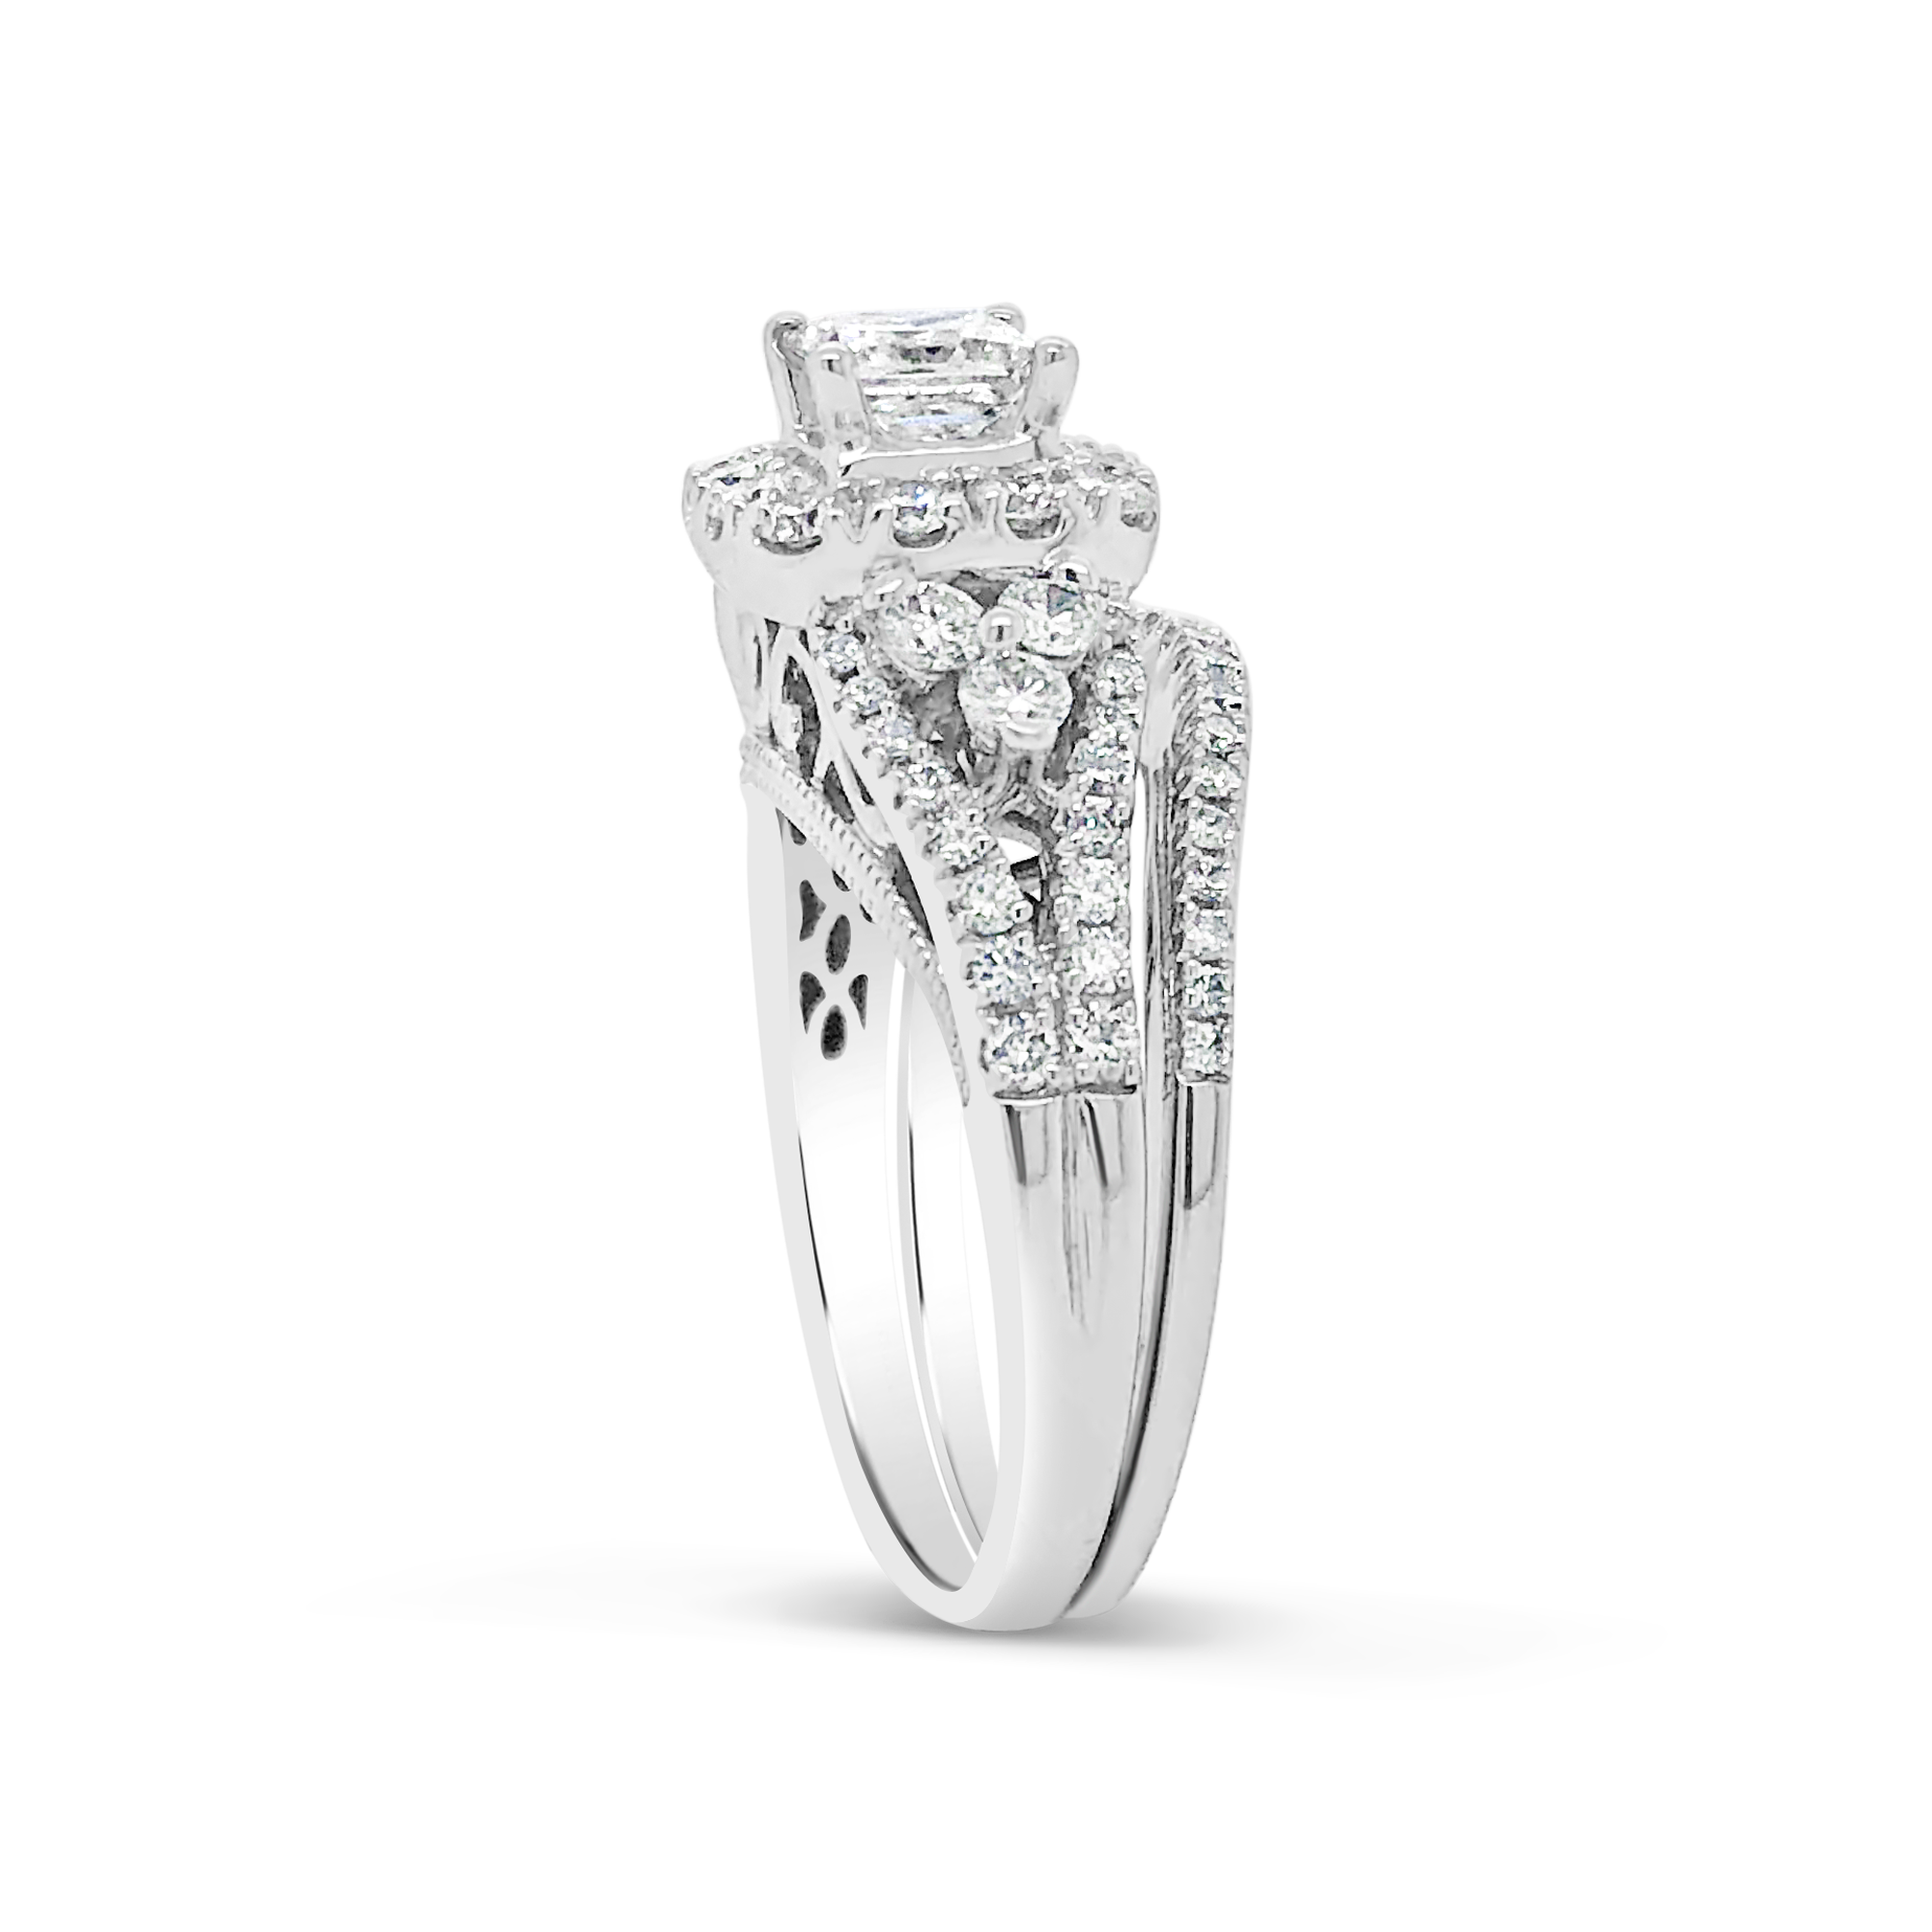 Diamond Halo Engagement Ring 1 5/8 CTW Princess Cut center w/Round Cut 14K White Gold